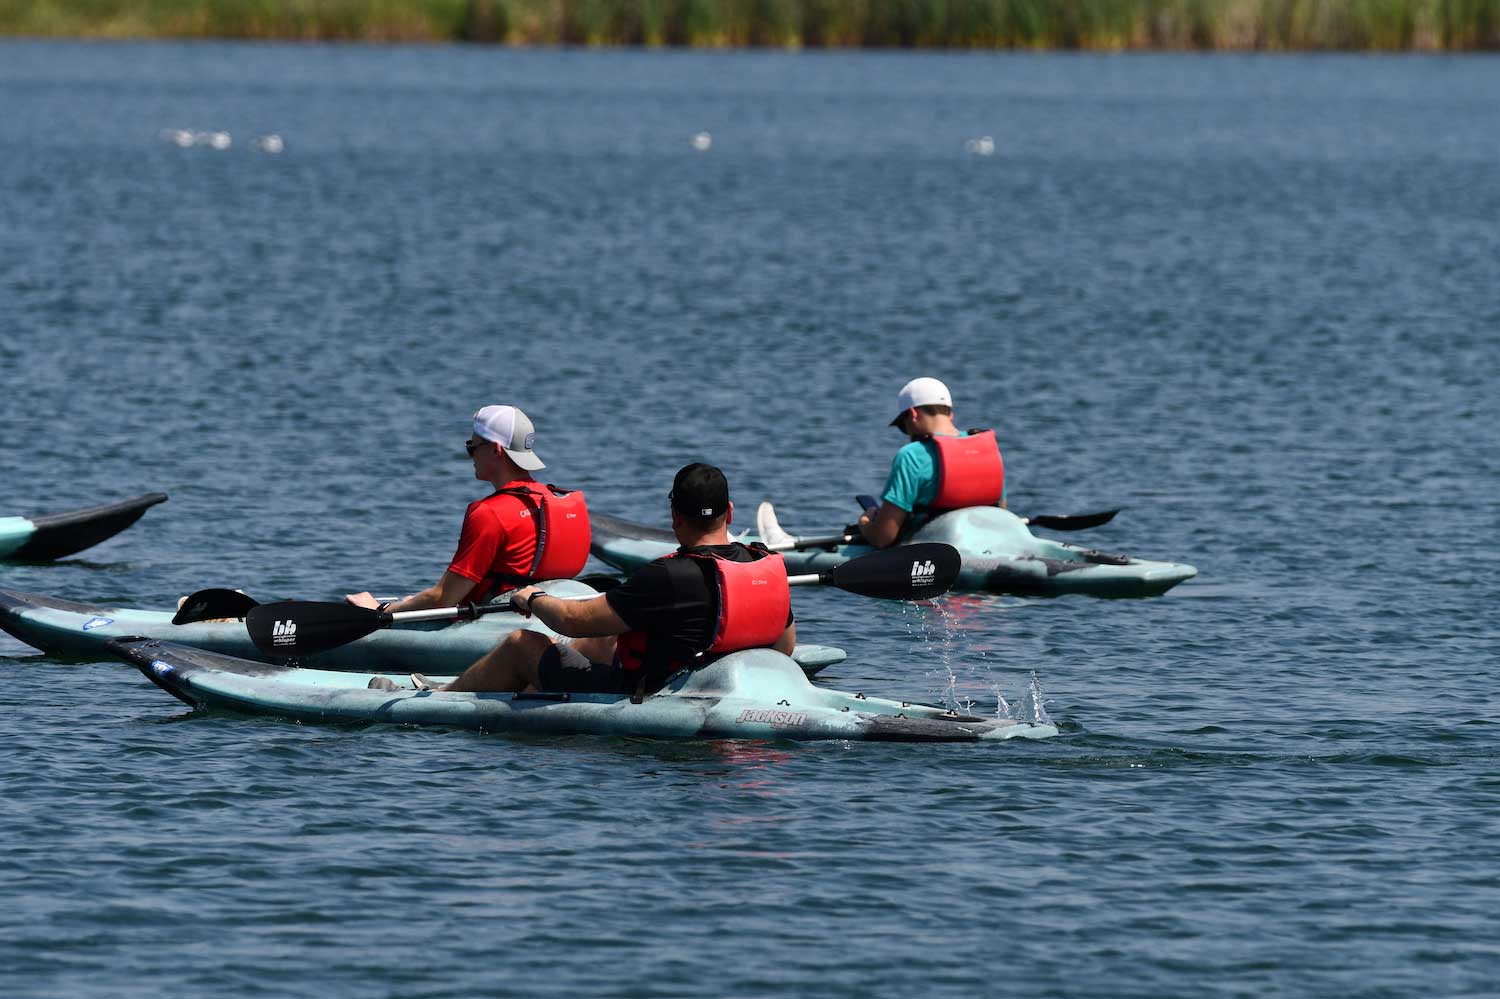 Three people on kayaks in a lake.